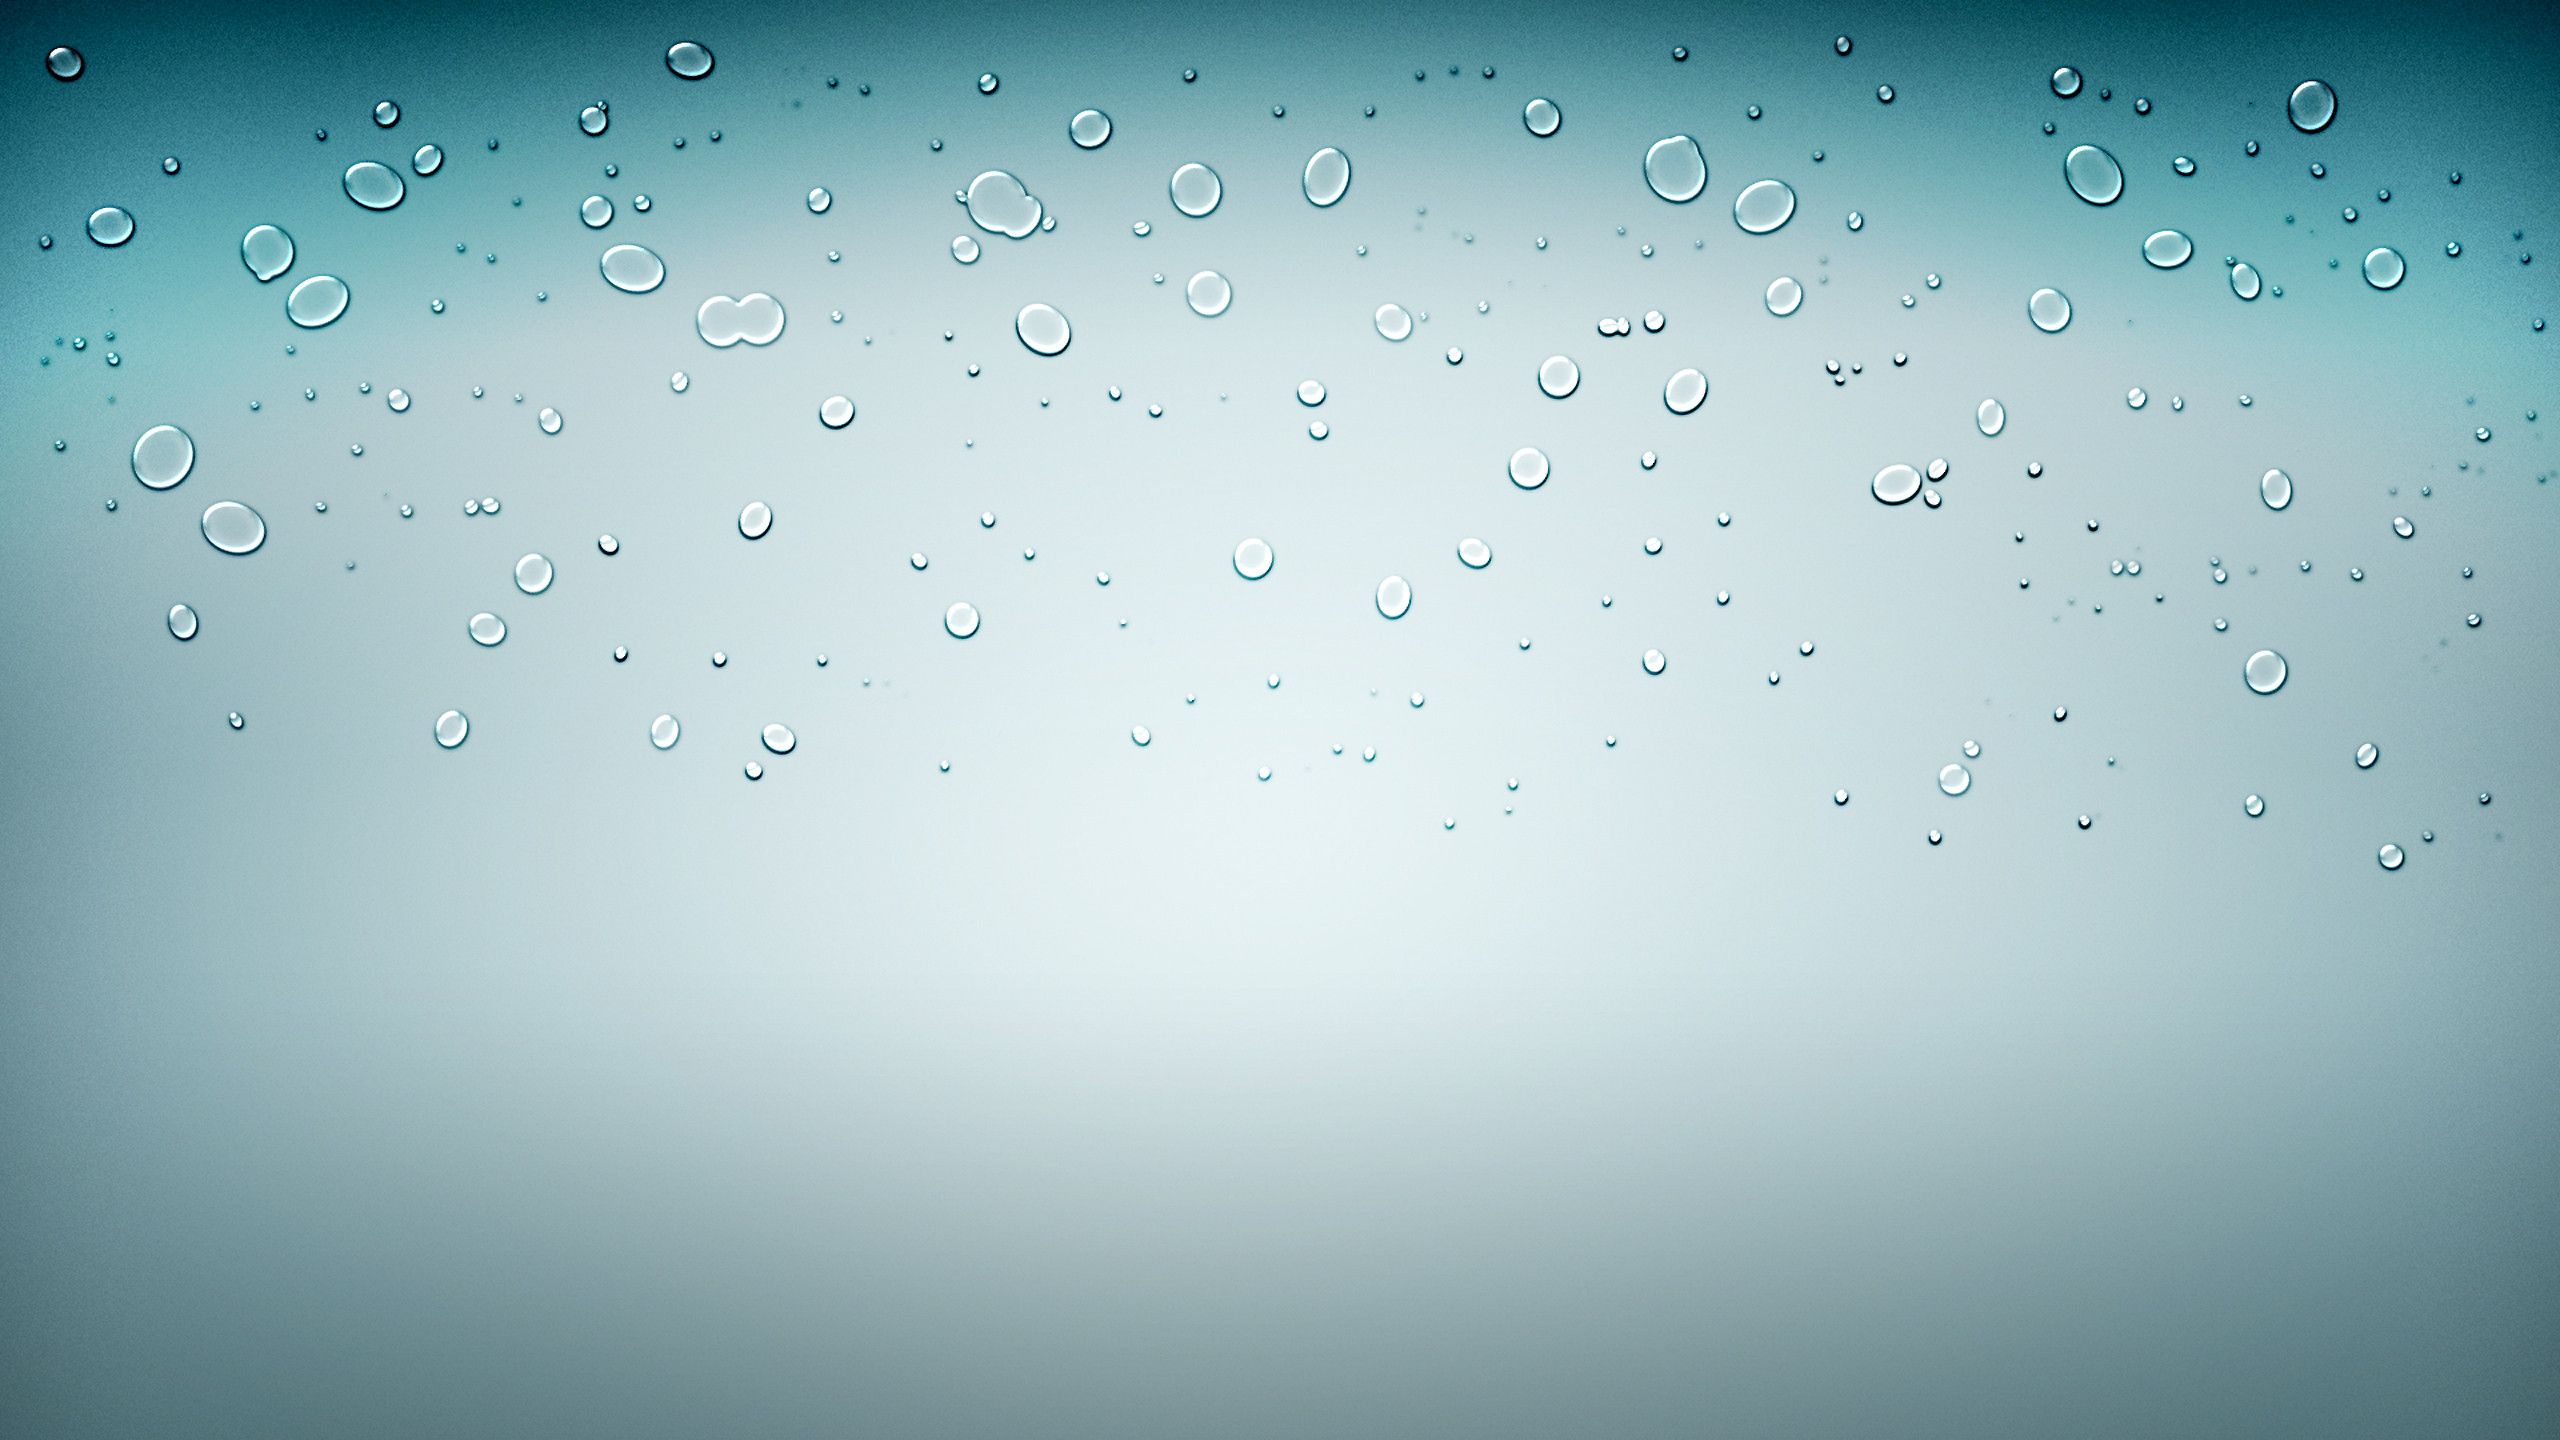 iOS Water Droplet Wallpaper